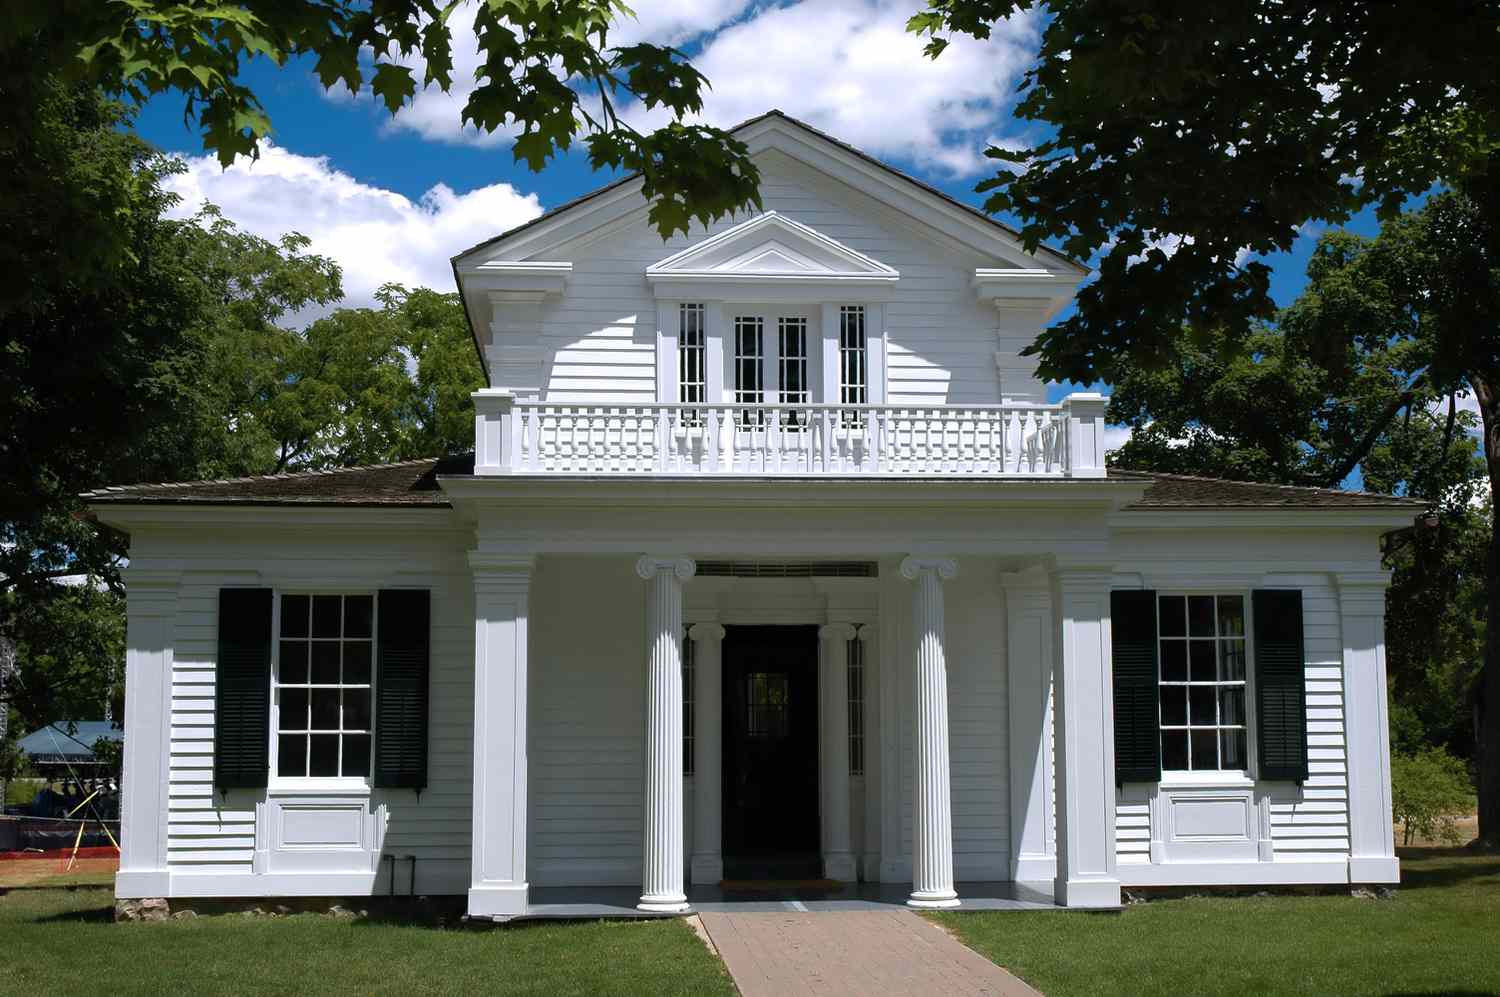 Greek Revival house in Greenfield Village, Michigan.